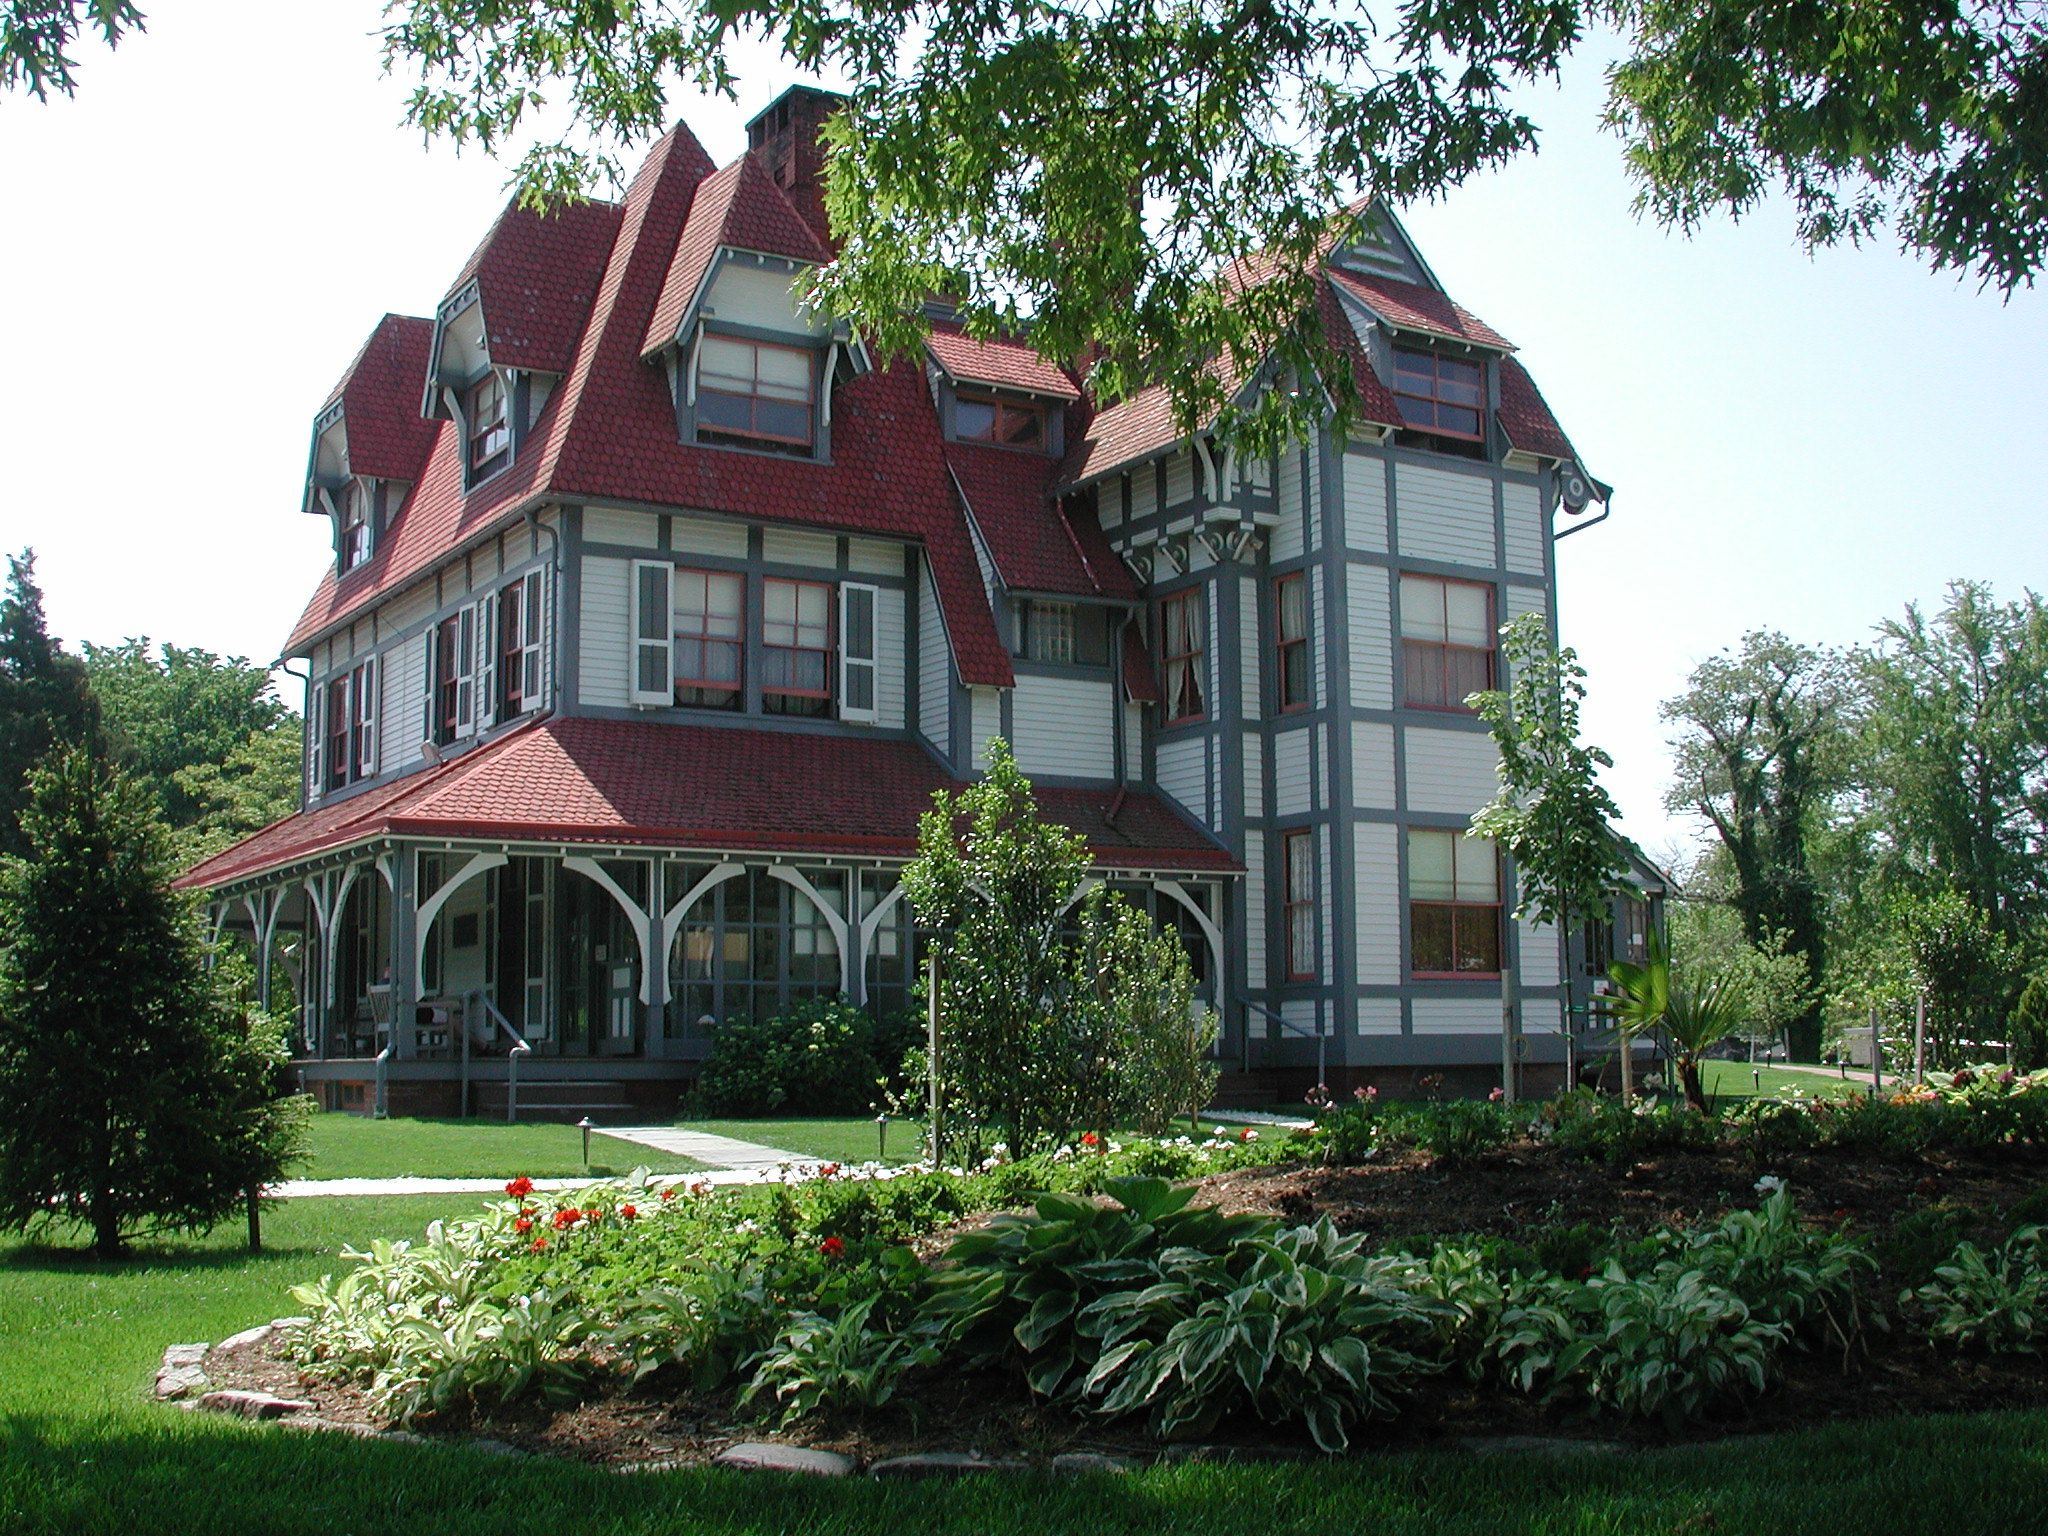 The mansion in Emlen Physick Estate